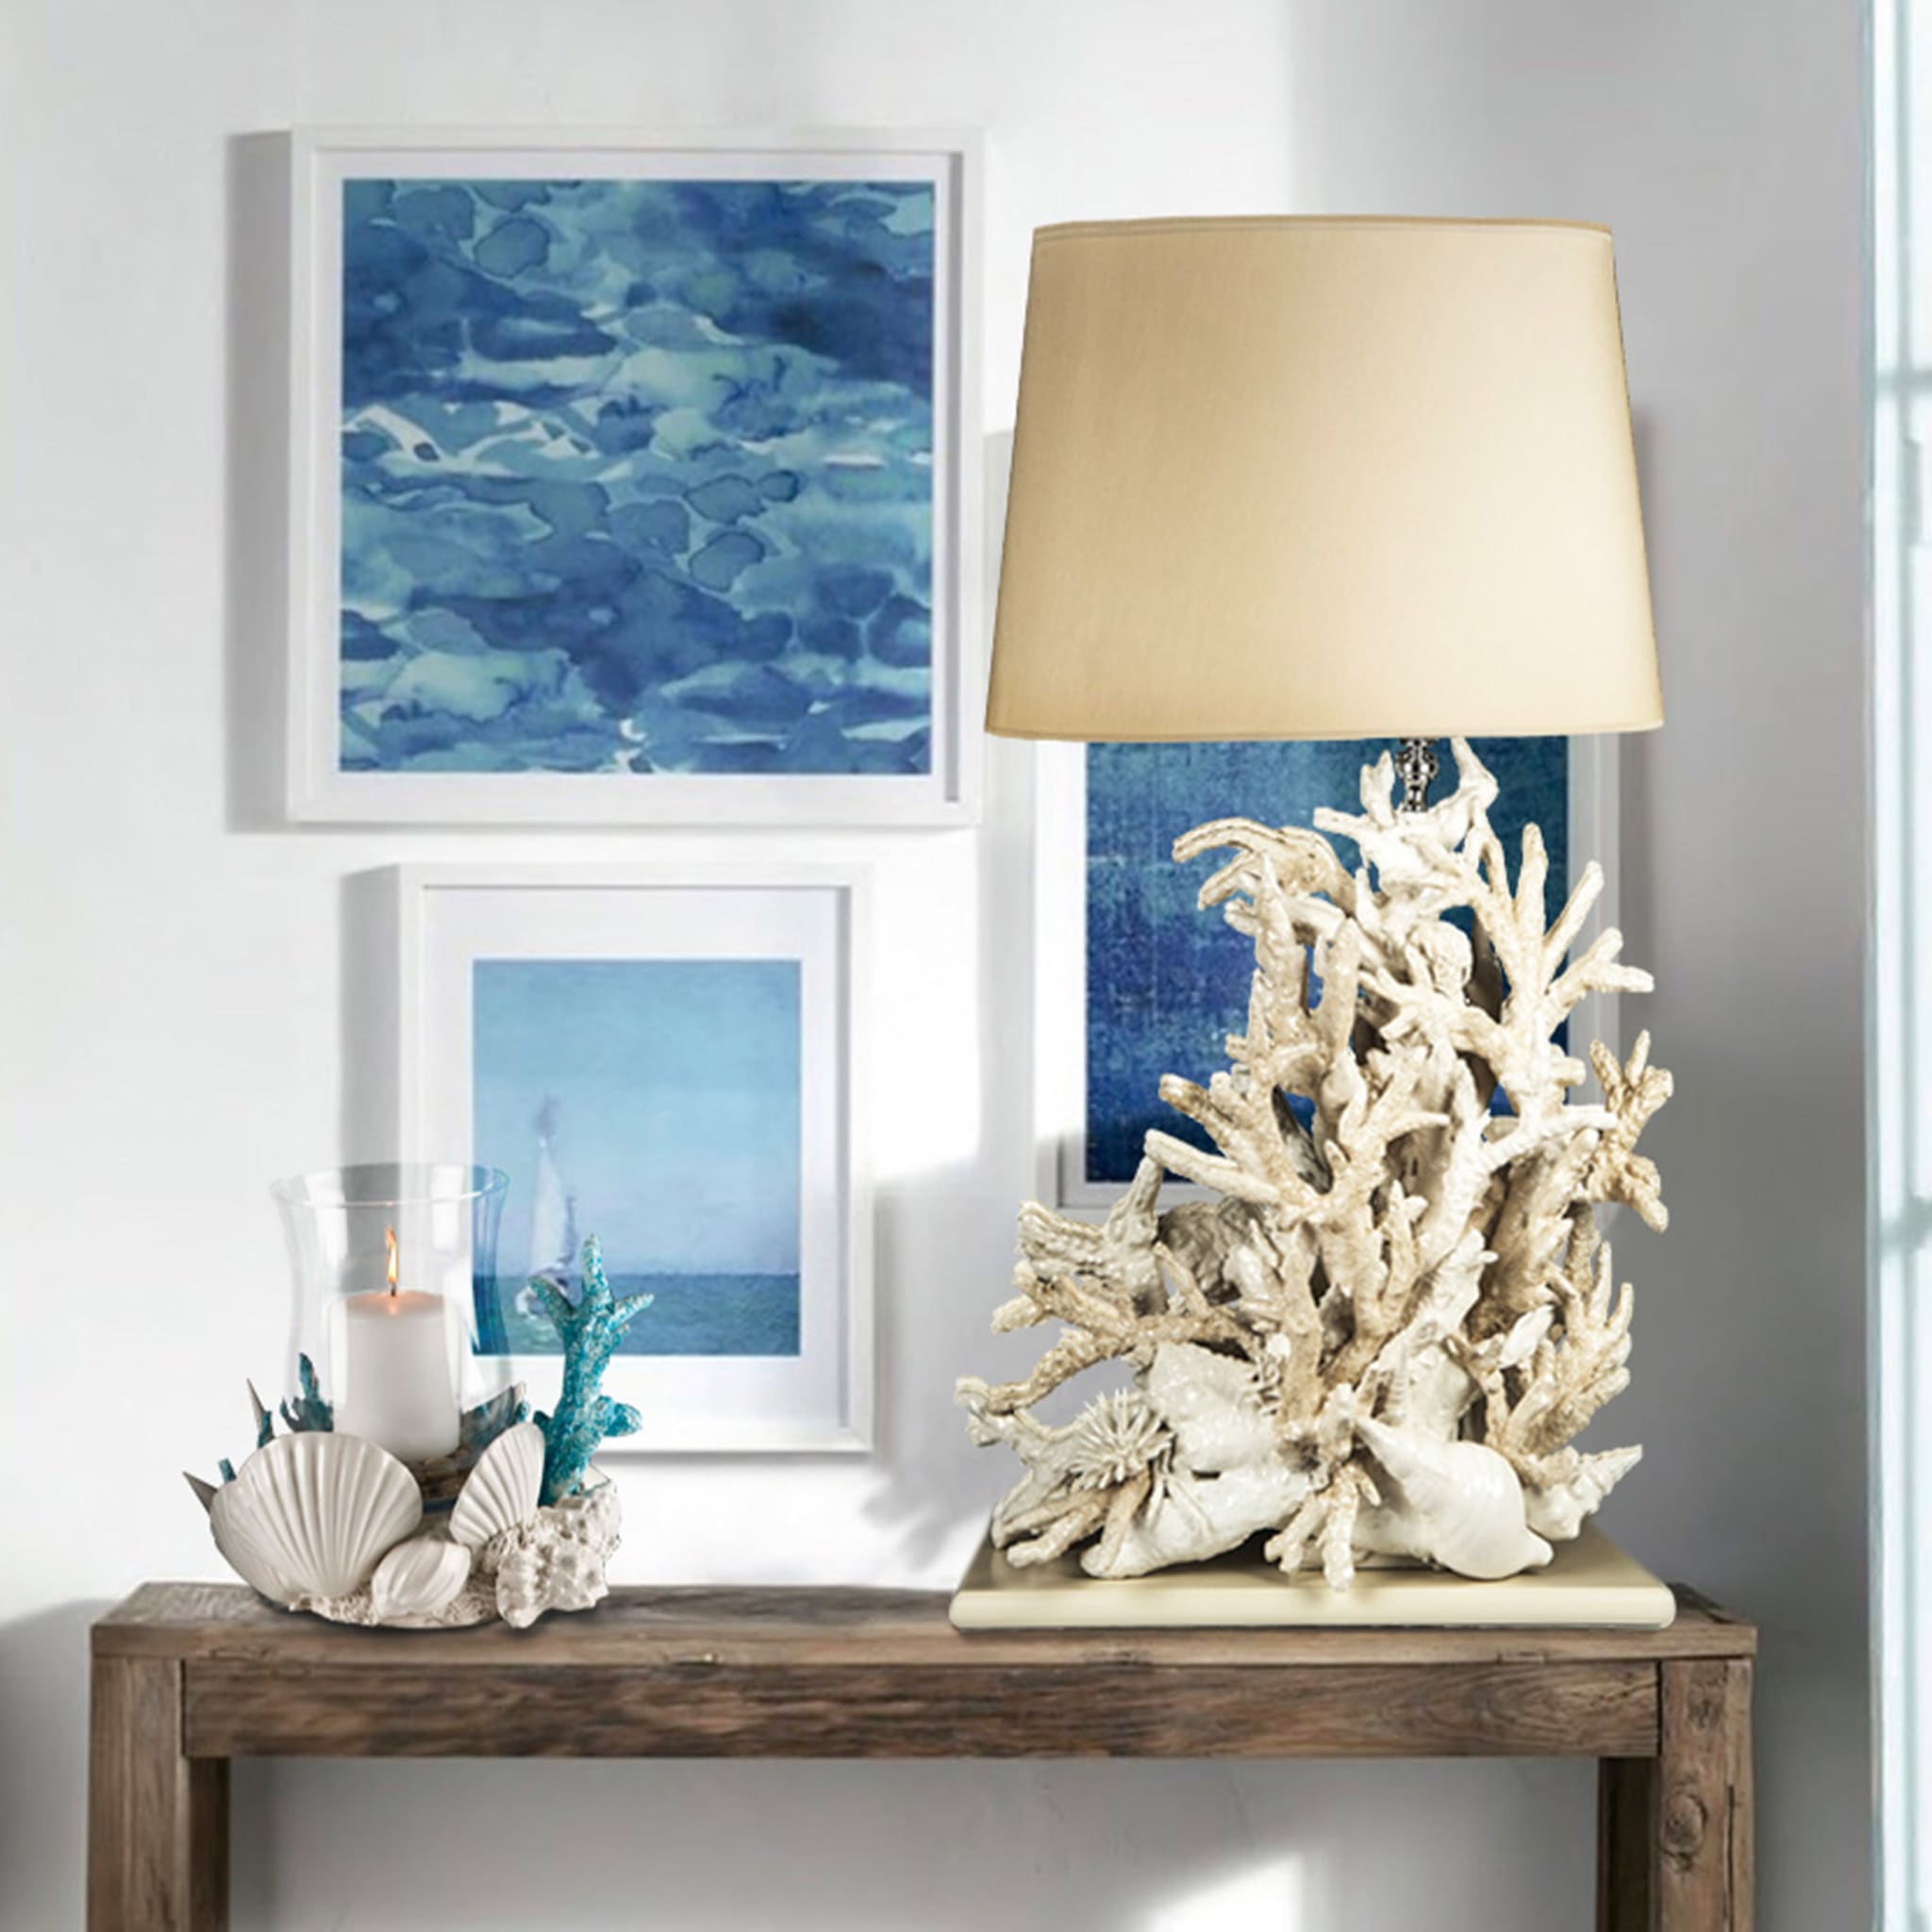 Coralli Beige Table Lamp by Antonio Fullin - Alternative view 1